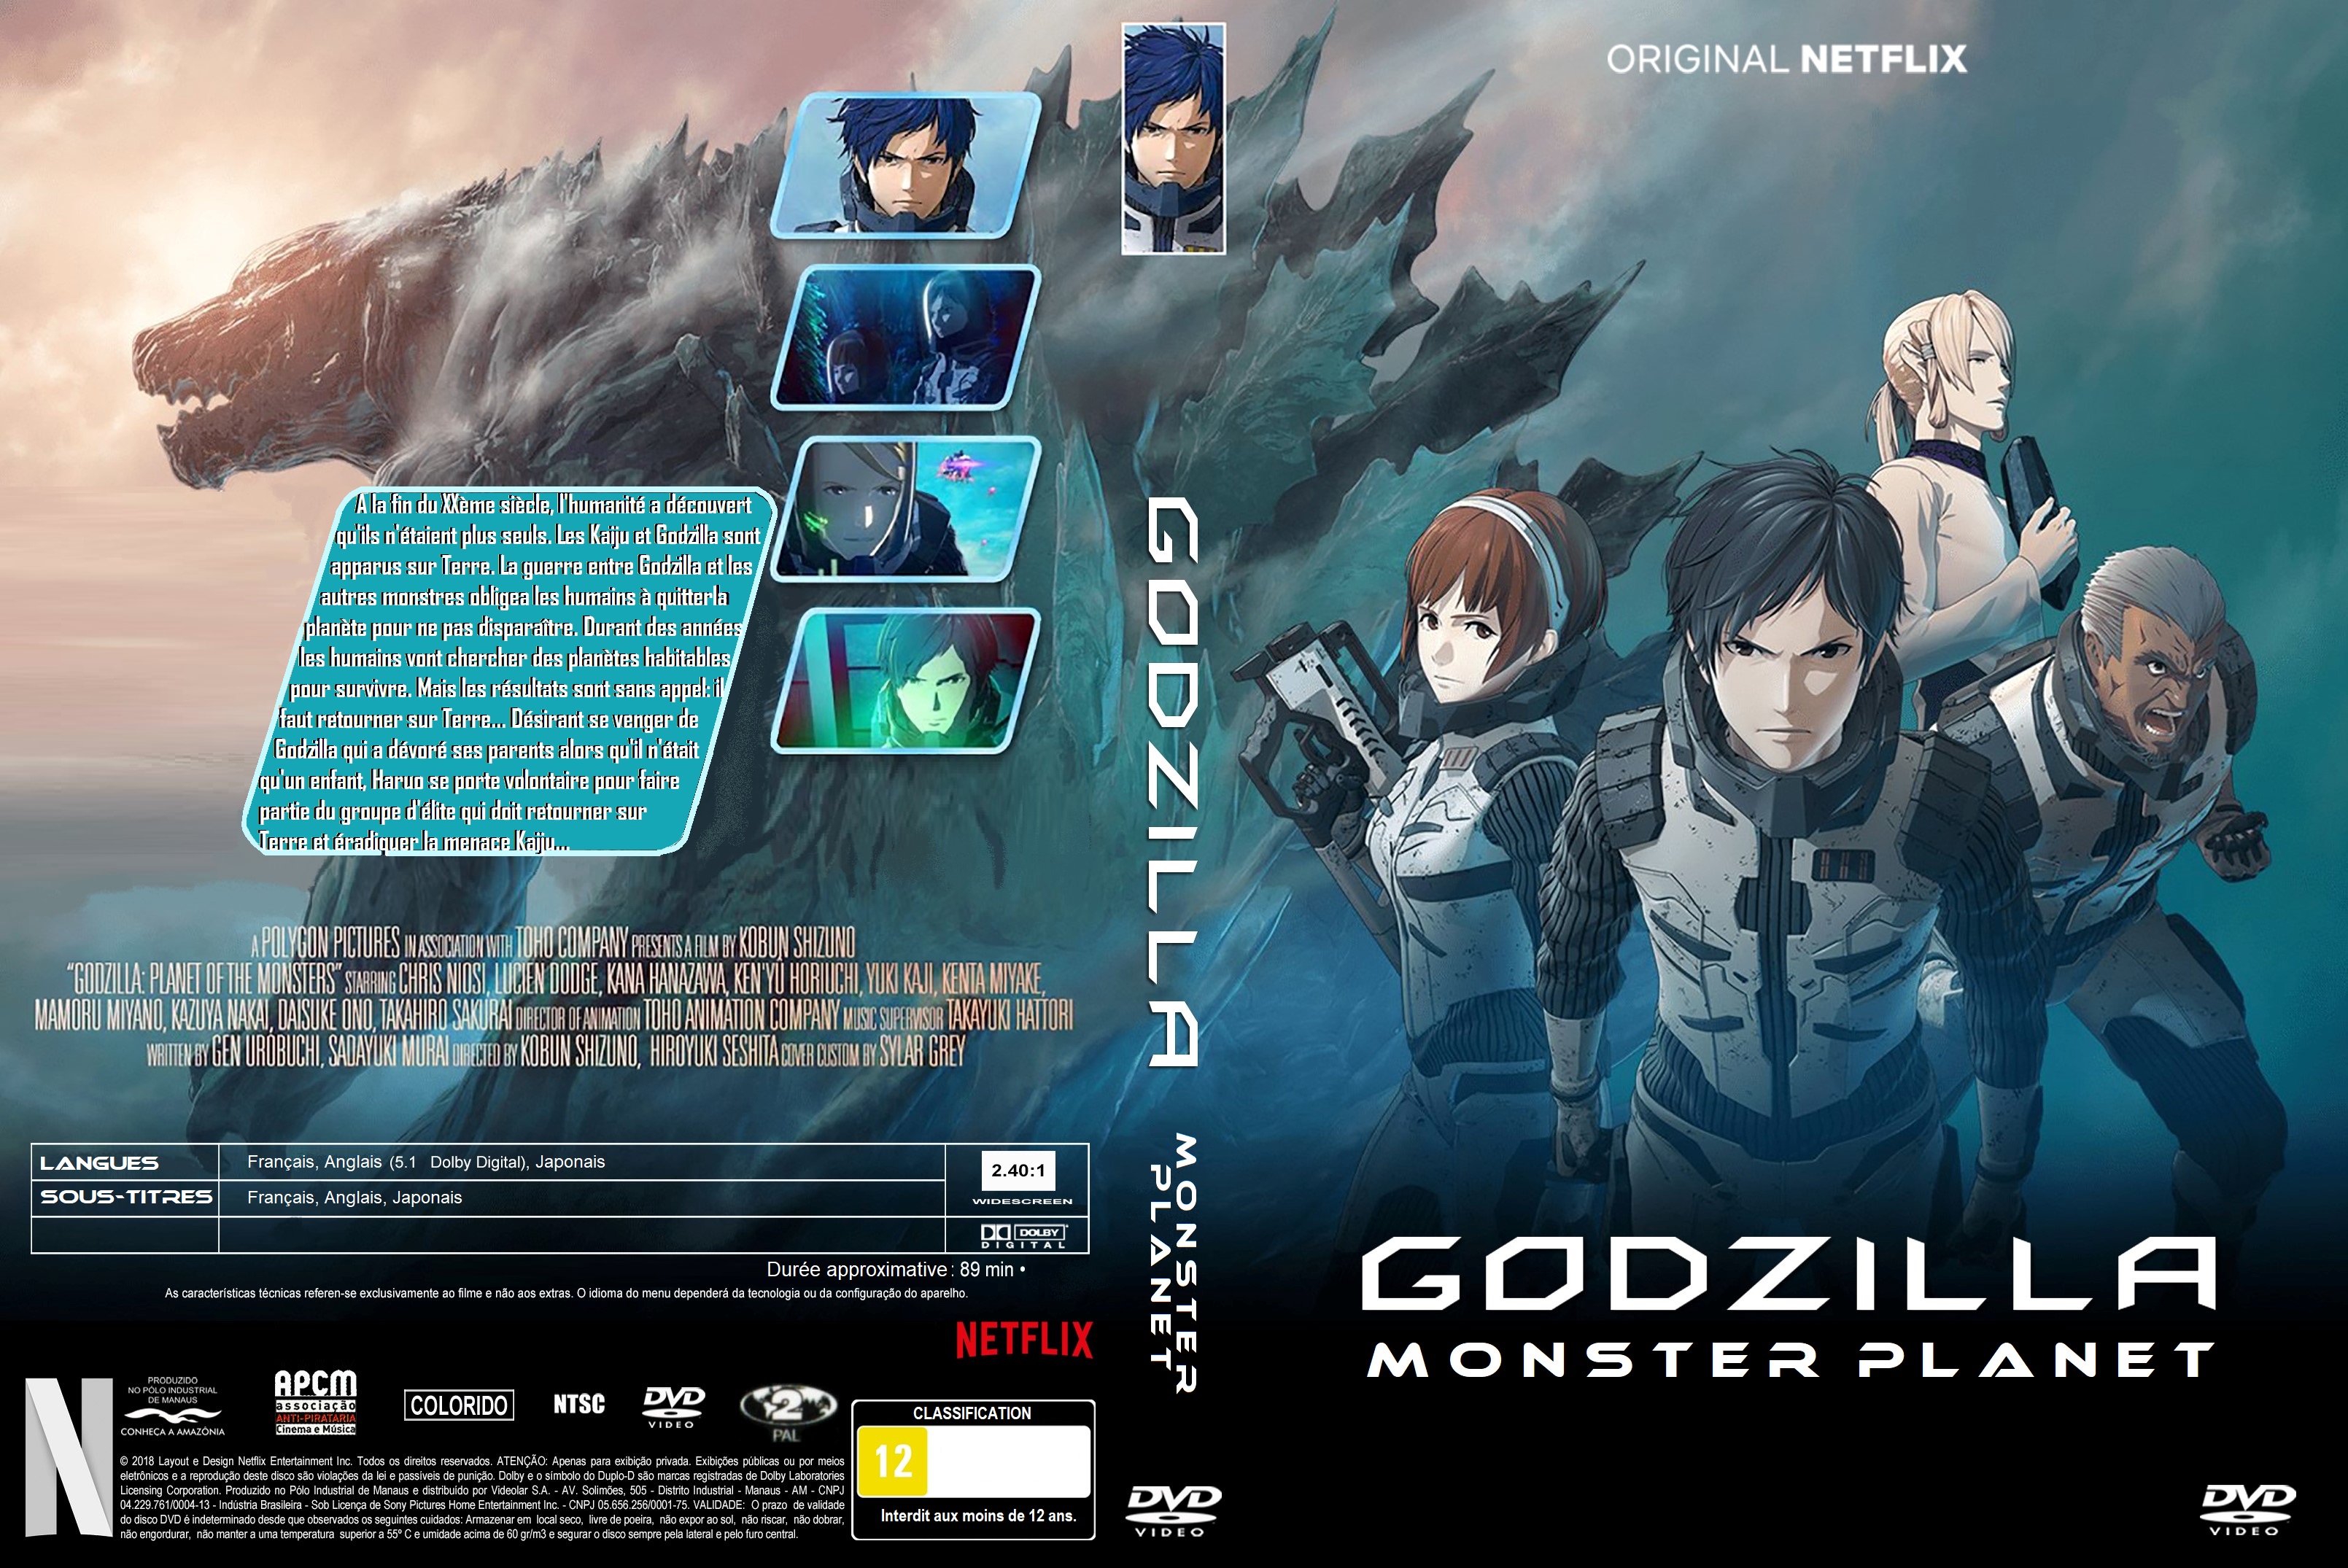 Jaquette DVD Godzilla 1 Monster Planet custom